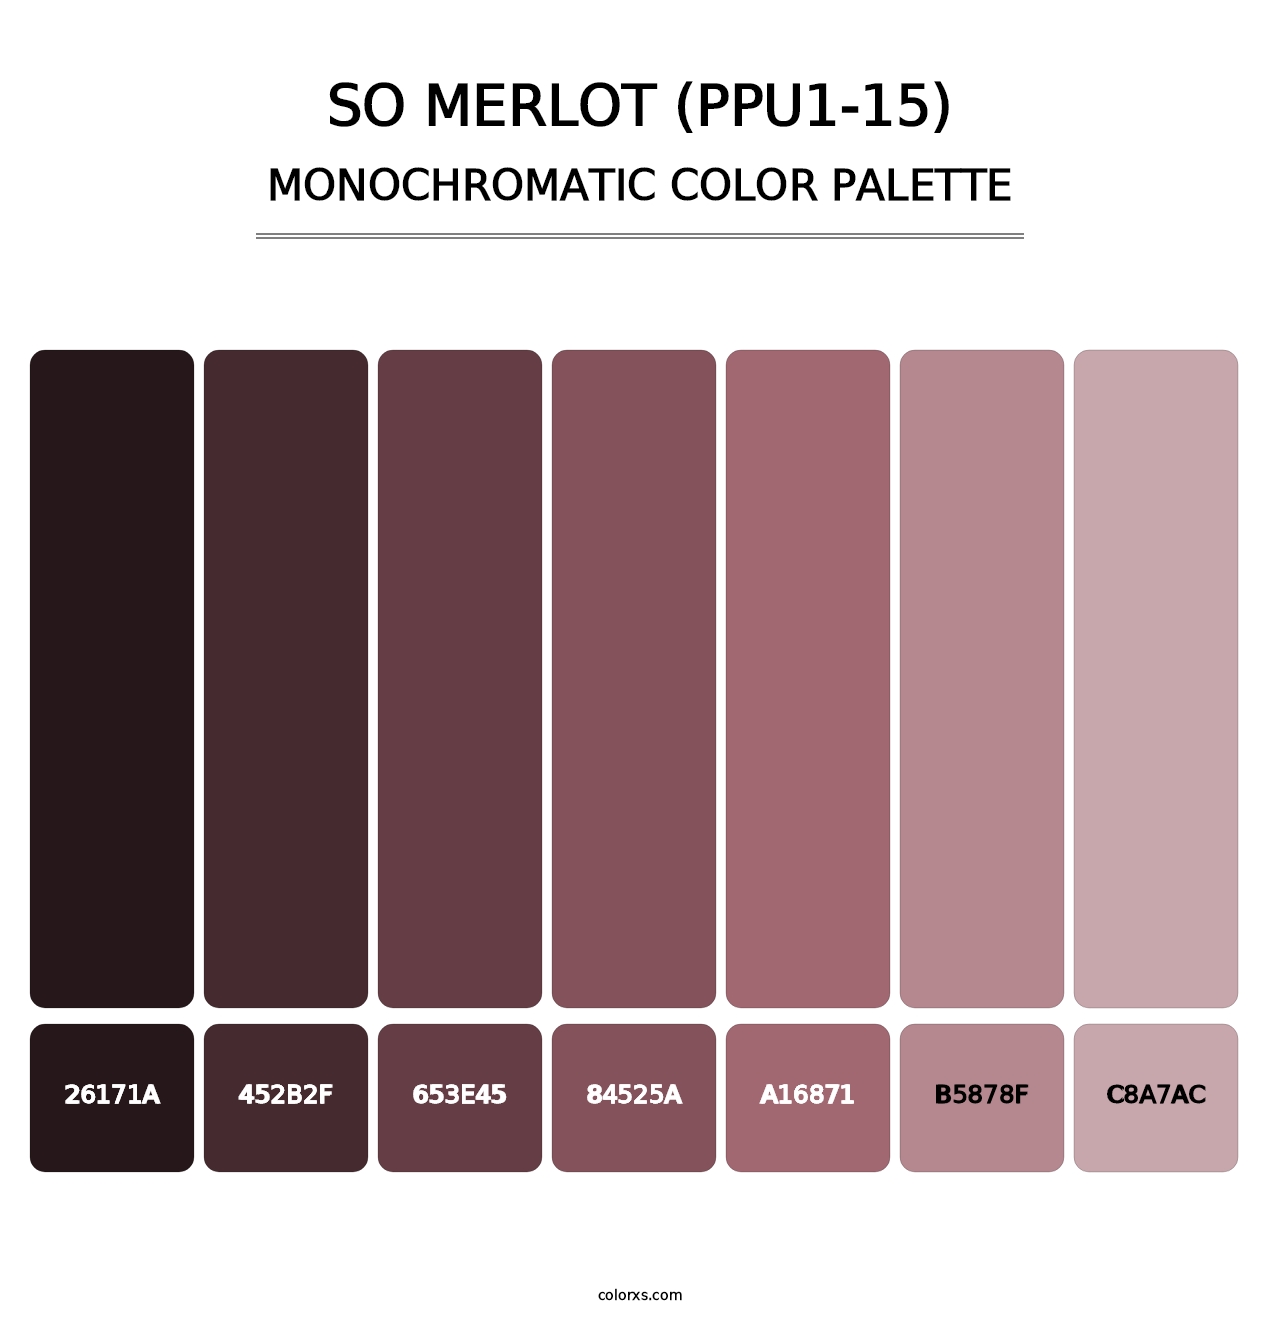 So Merlot (PPU1-15) - Monochromatic Color Palette